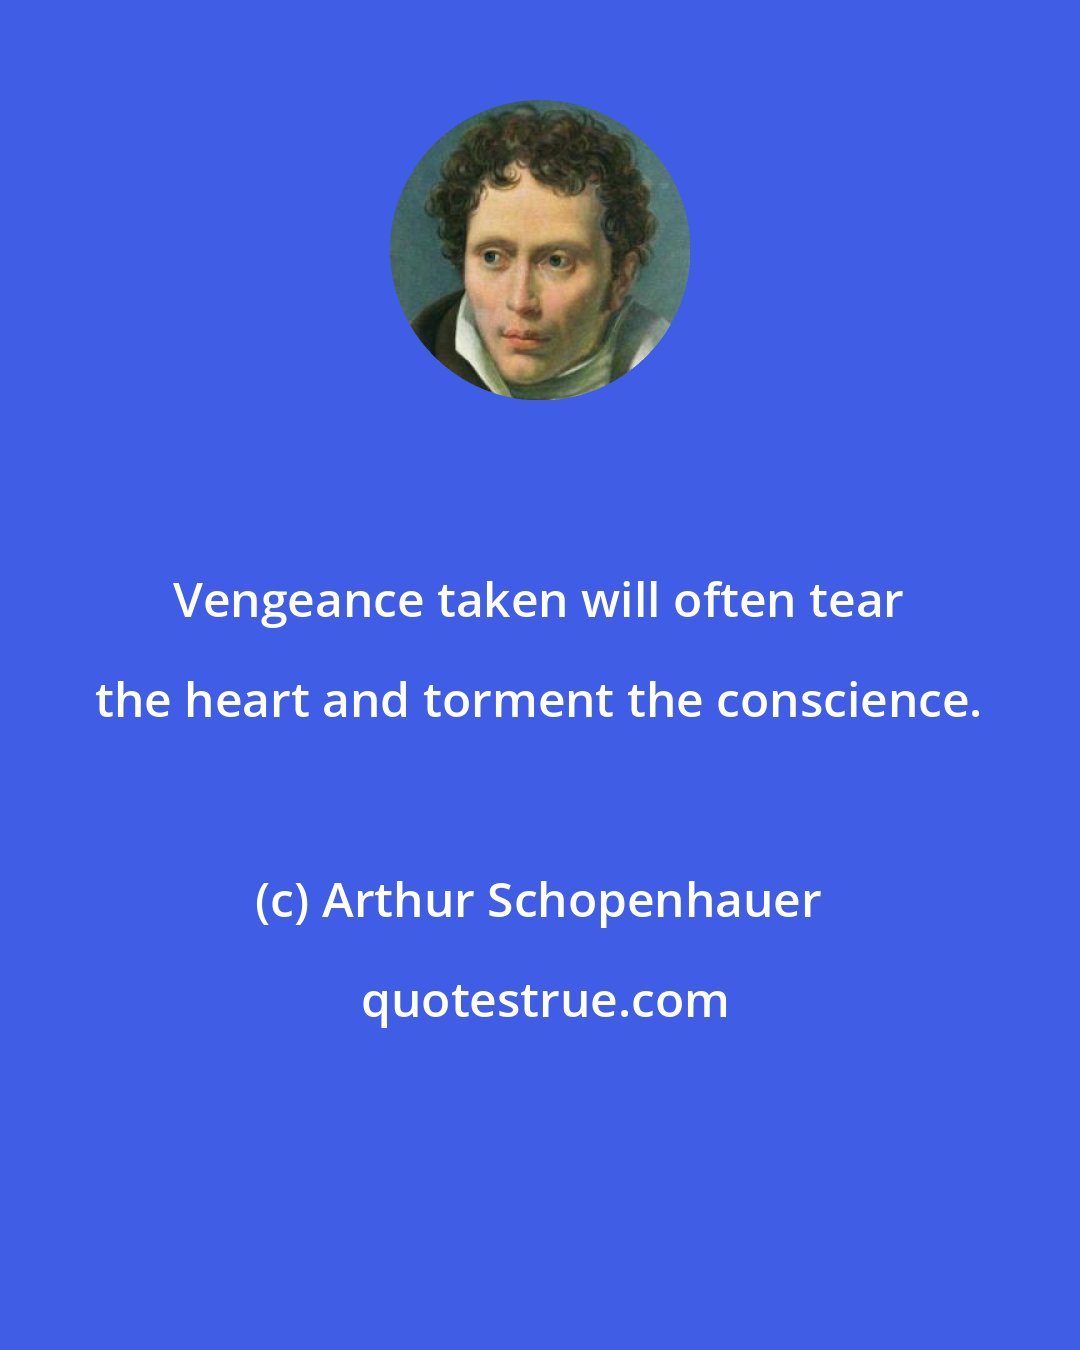 Arthur Schopenhauer: Vengeance taken will often tear the heart and torment the conscience.